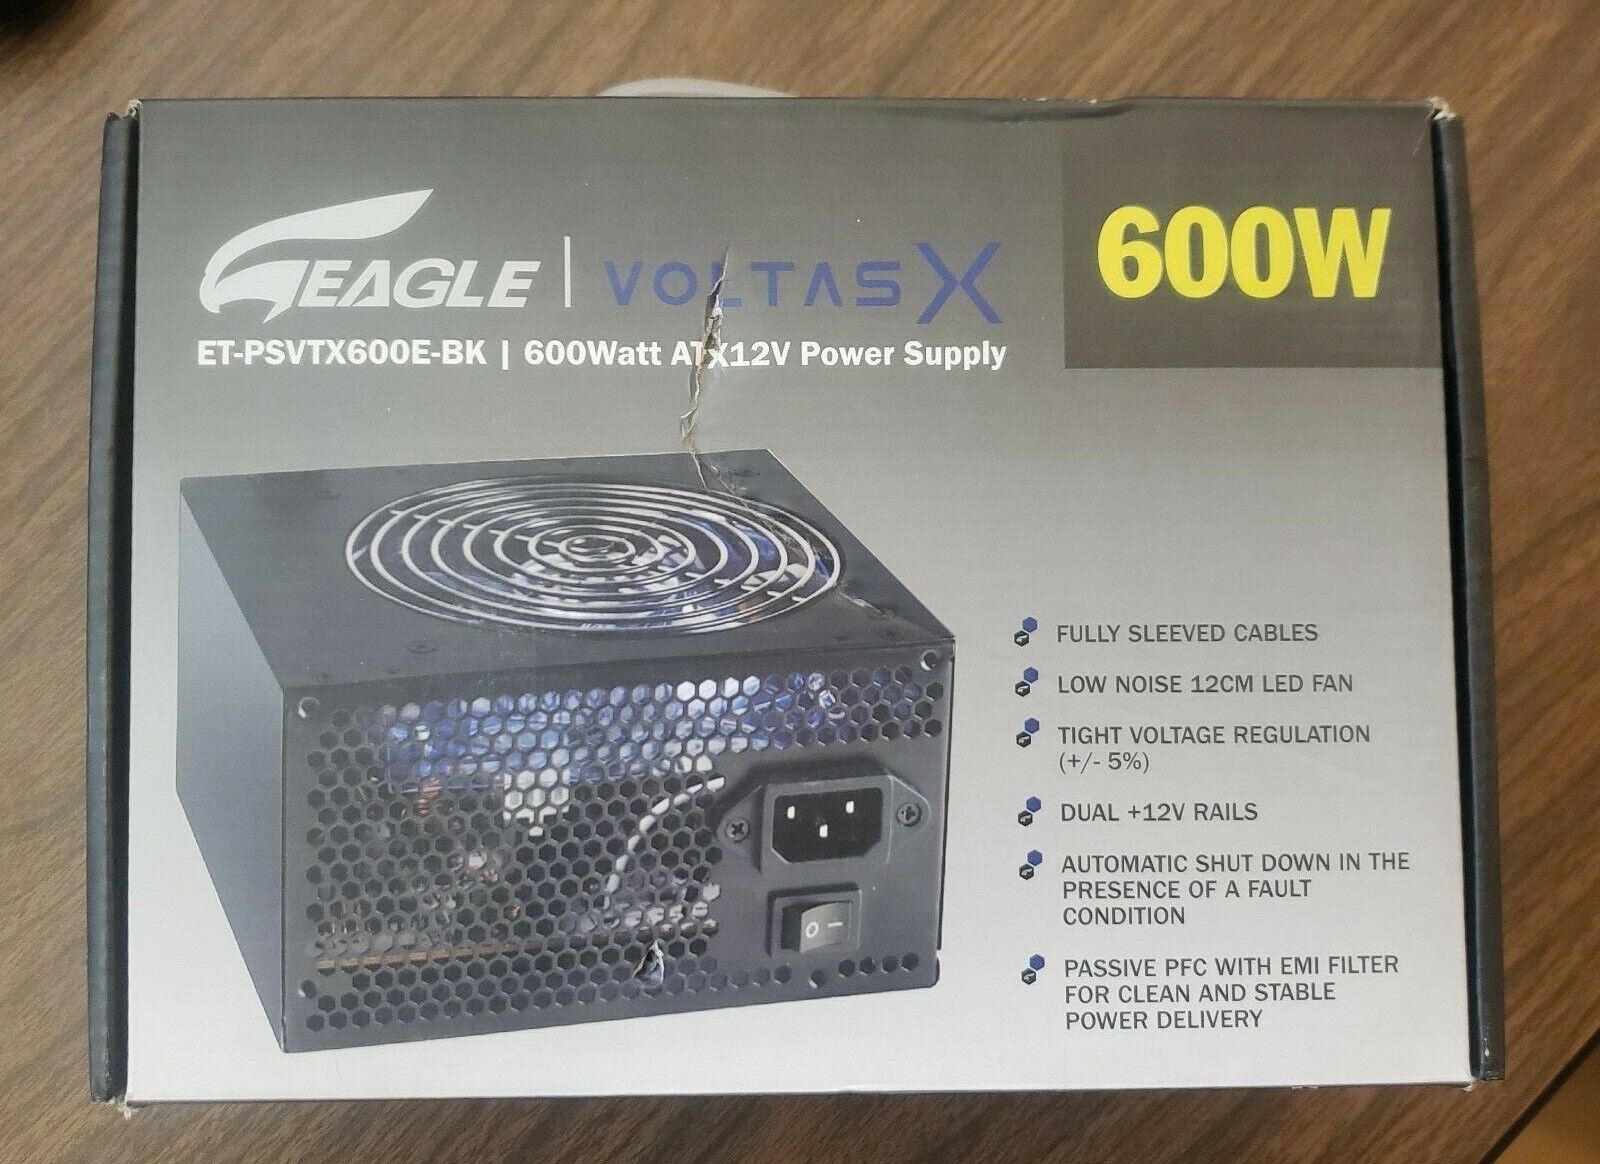 New Eagle Voltas X 600Watt ATX 12V Power Supply Low Noise 12CM LED Fan Dual +12V